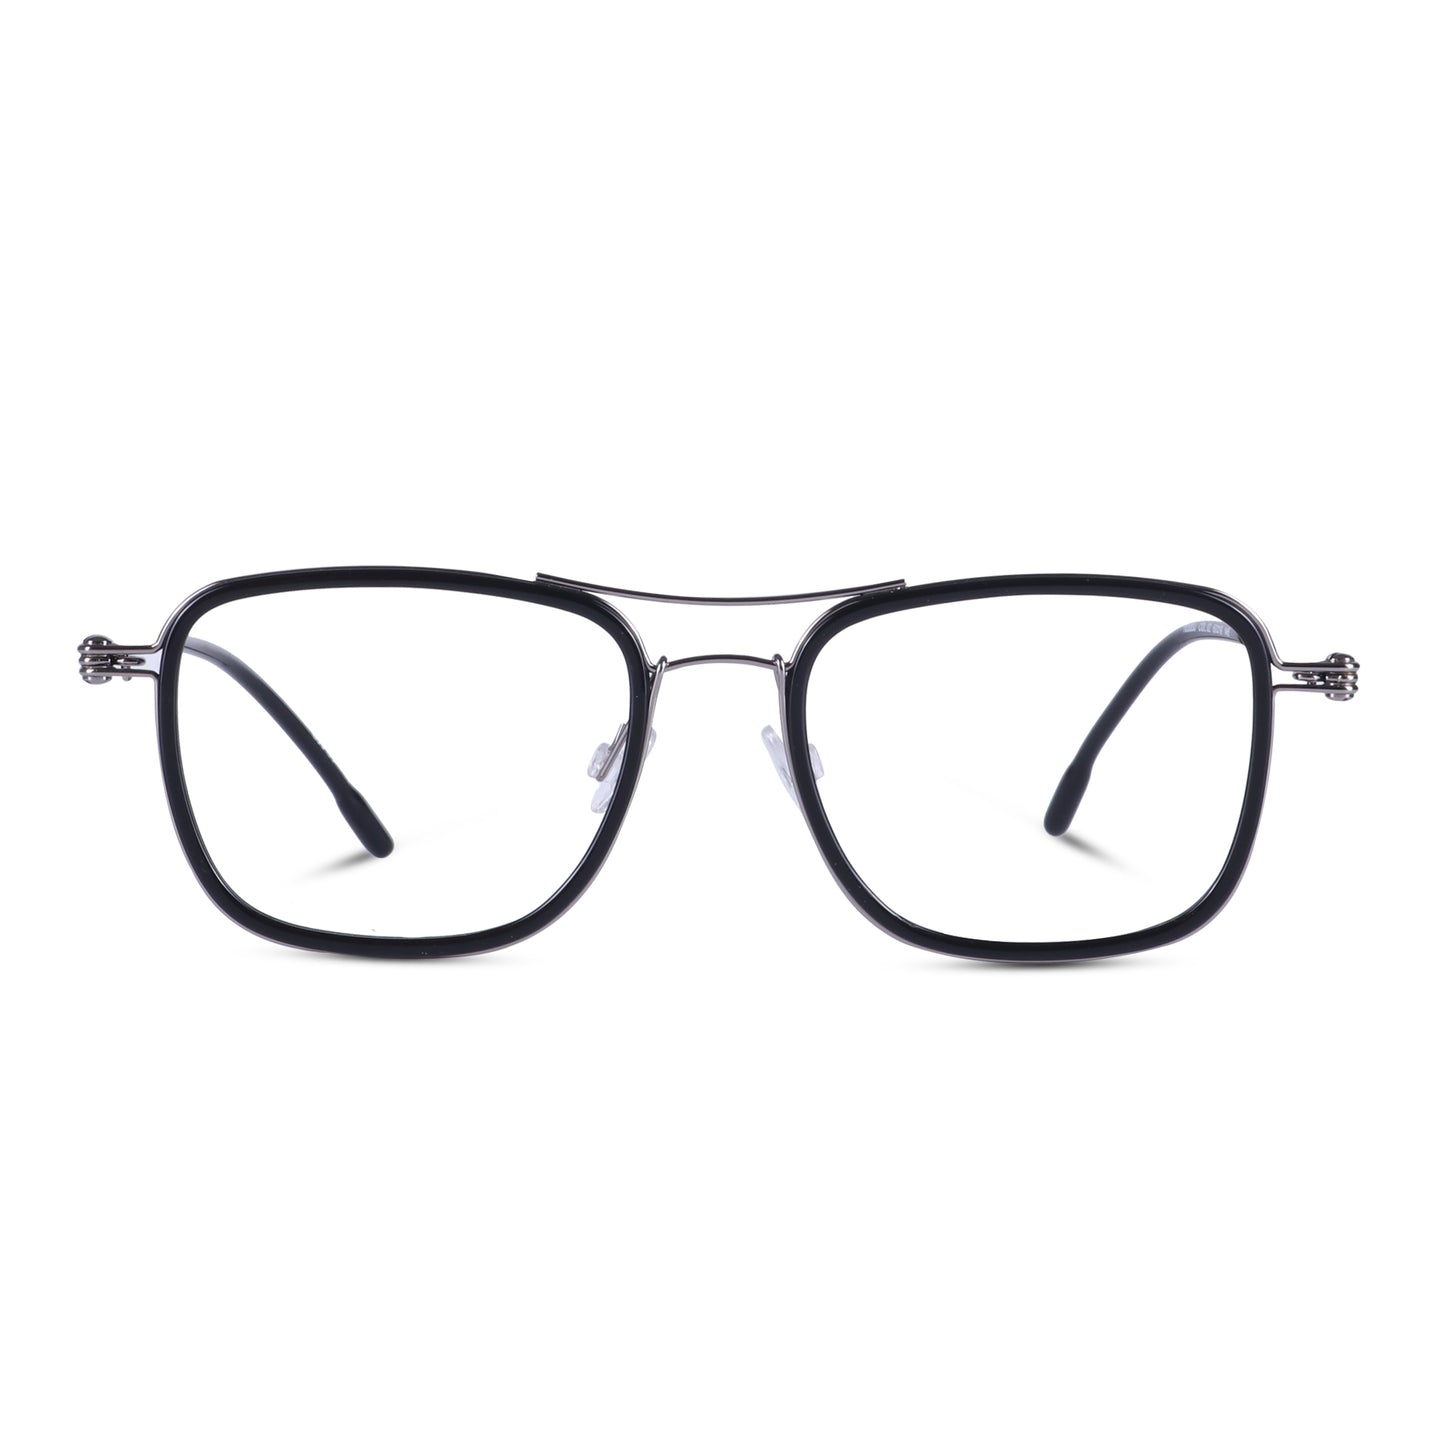 Loscomun Computer Glasses Black Square Eyeglasses